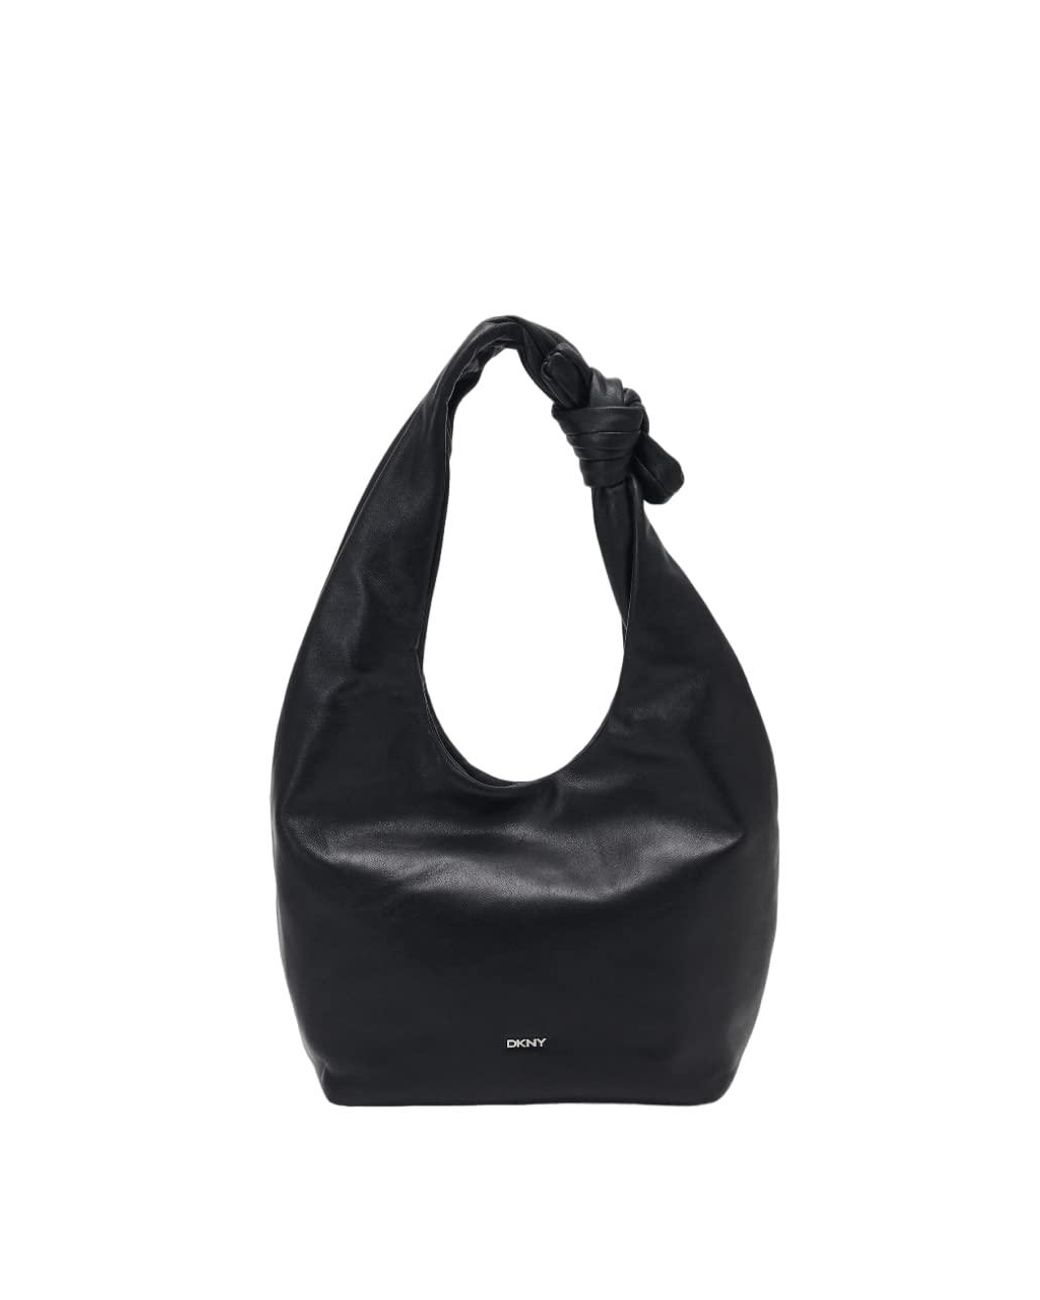 DKNY Soft Sophie Hobo Handbags in Black | Lyst